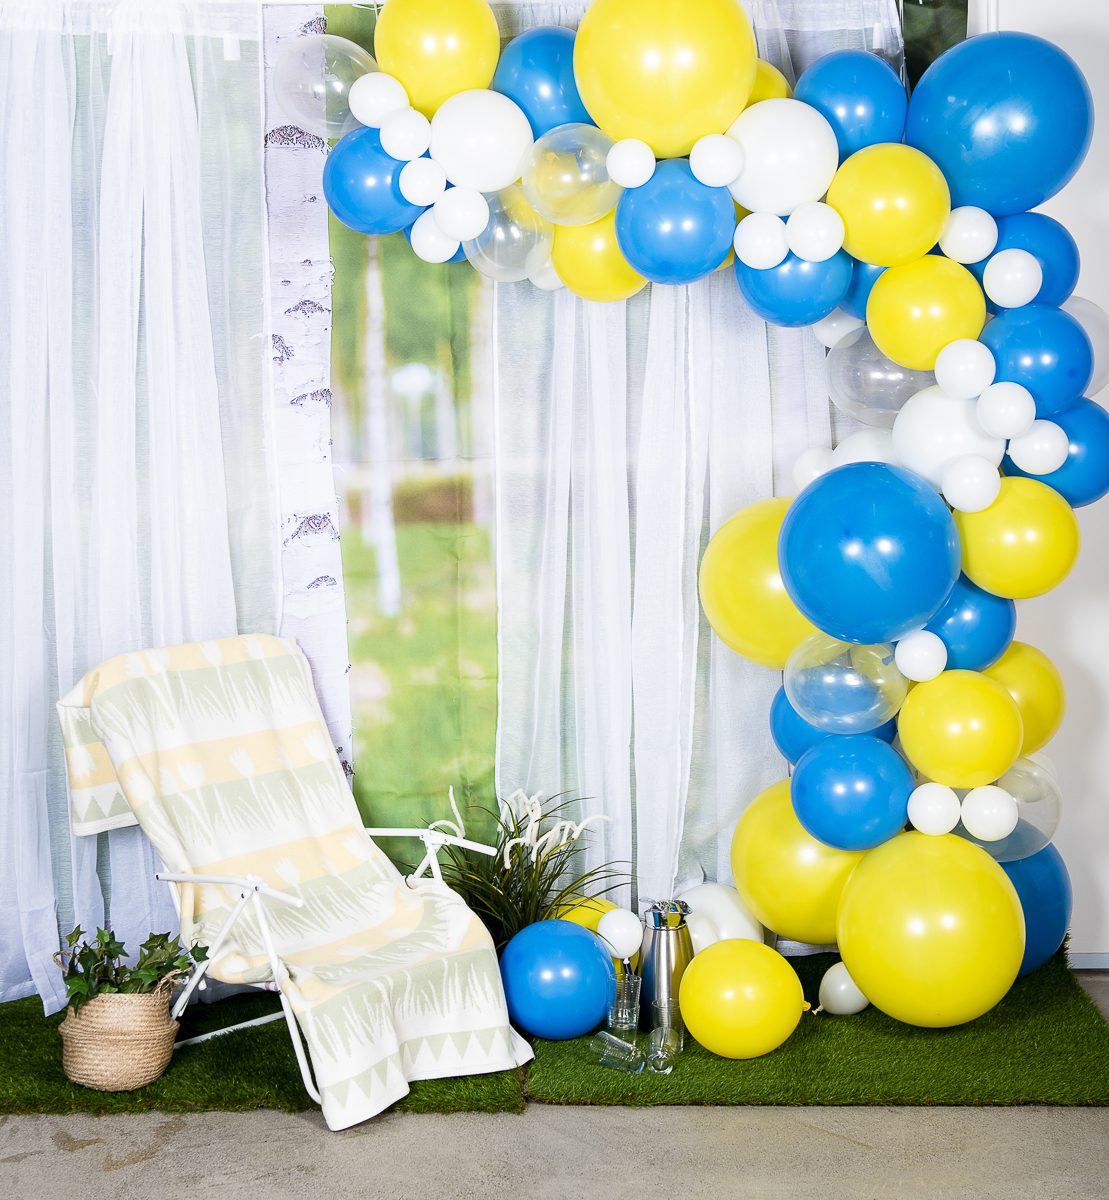 Ballong Arch sweden student En båge med blå, gula och vita ballonger